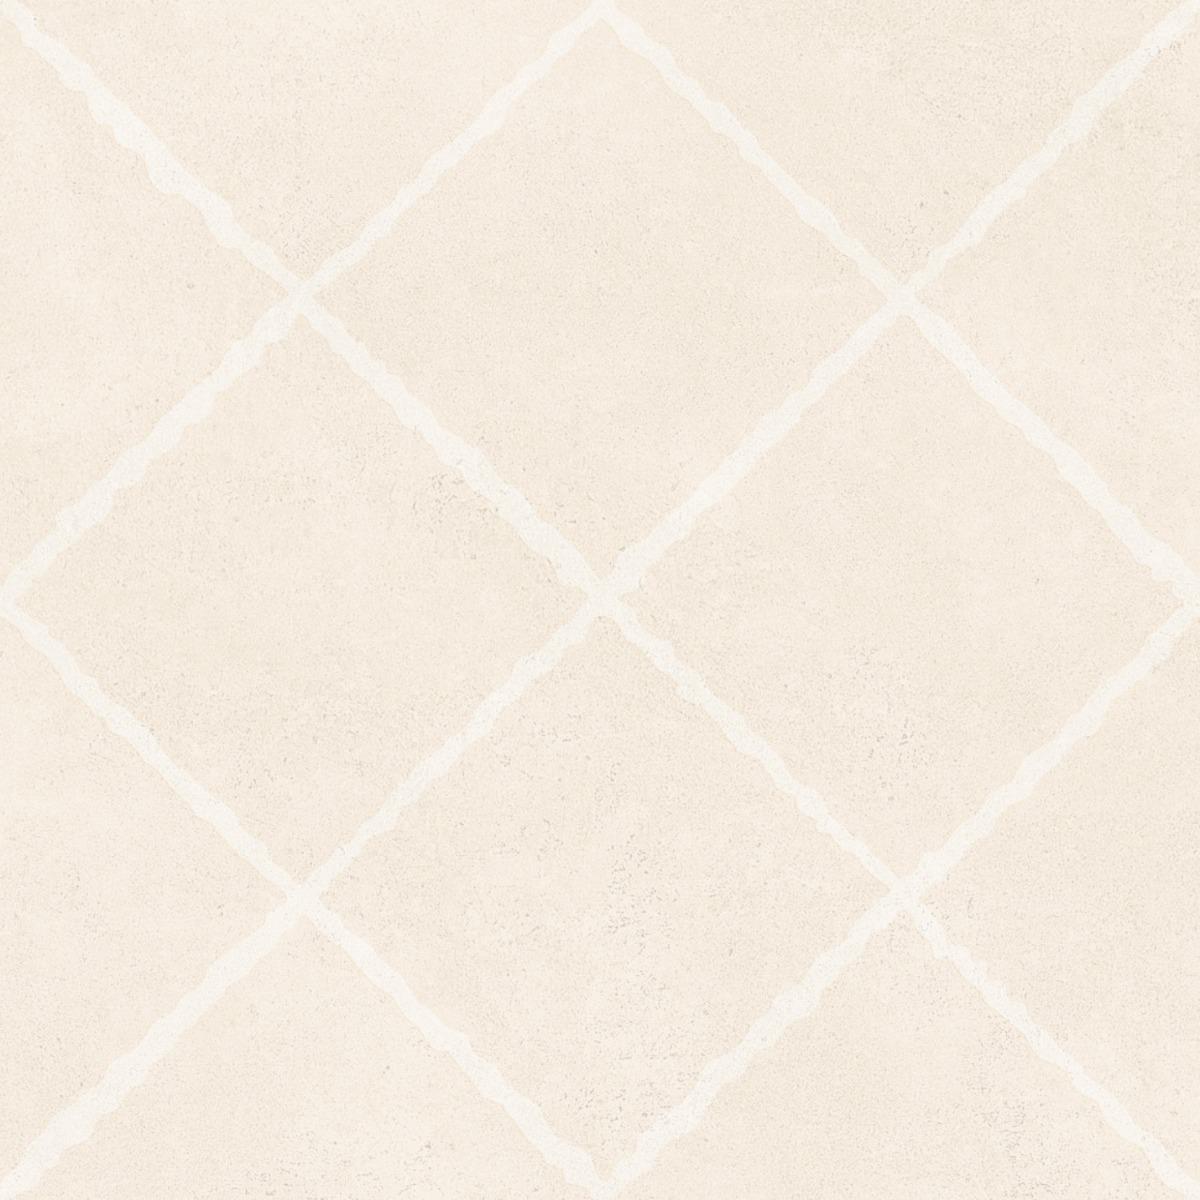 Cement Tiles for Bathroom Tiles, Kitchen Tiles, Balcony Tiles, Terrace Tiles